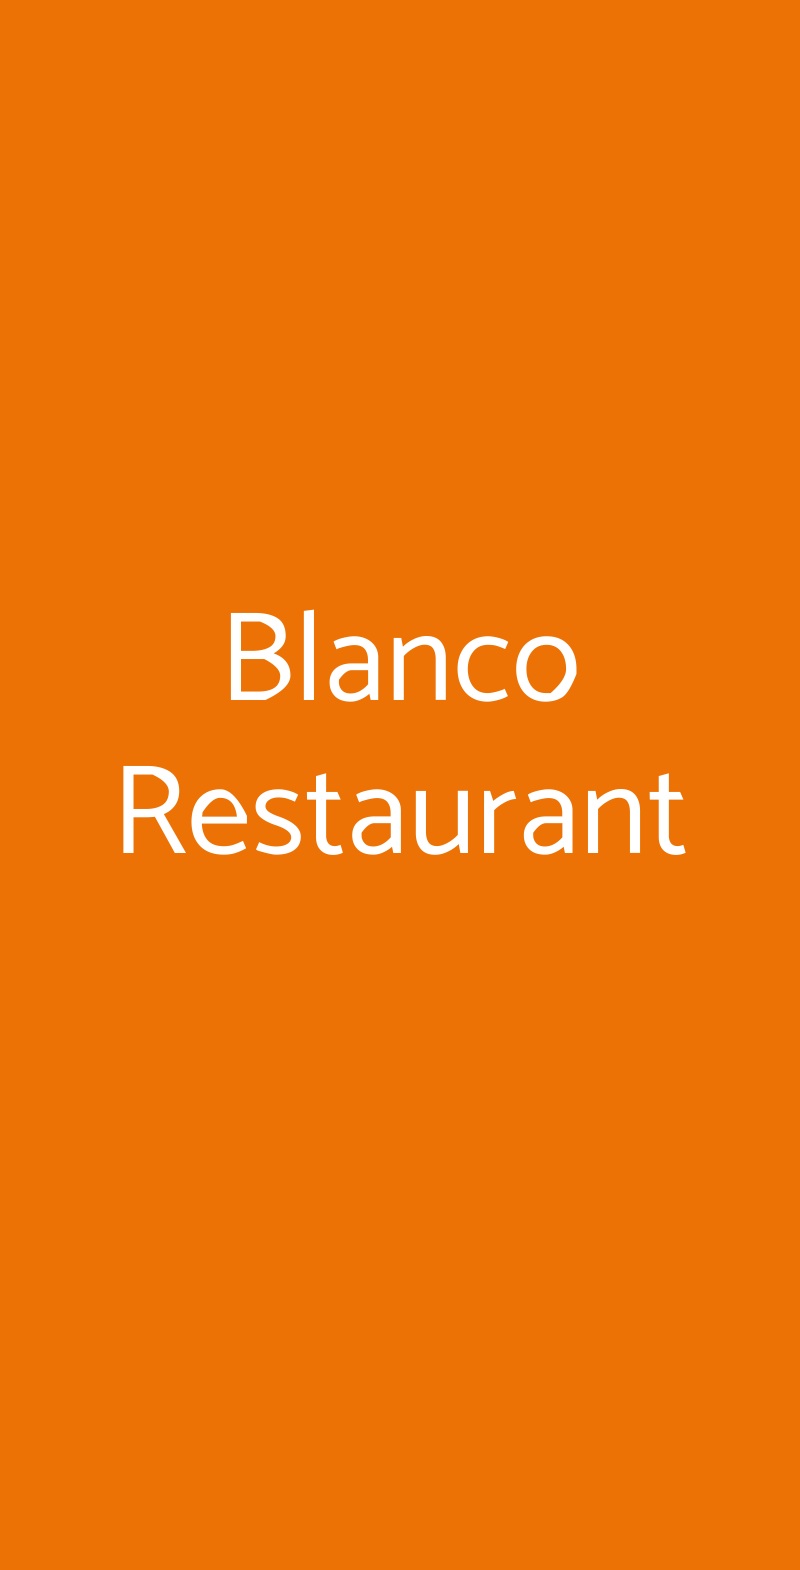 Blanco Restaurant Roma menù 1 pagina